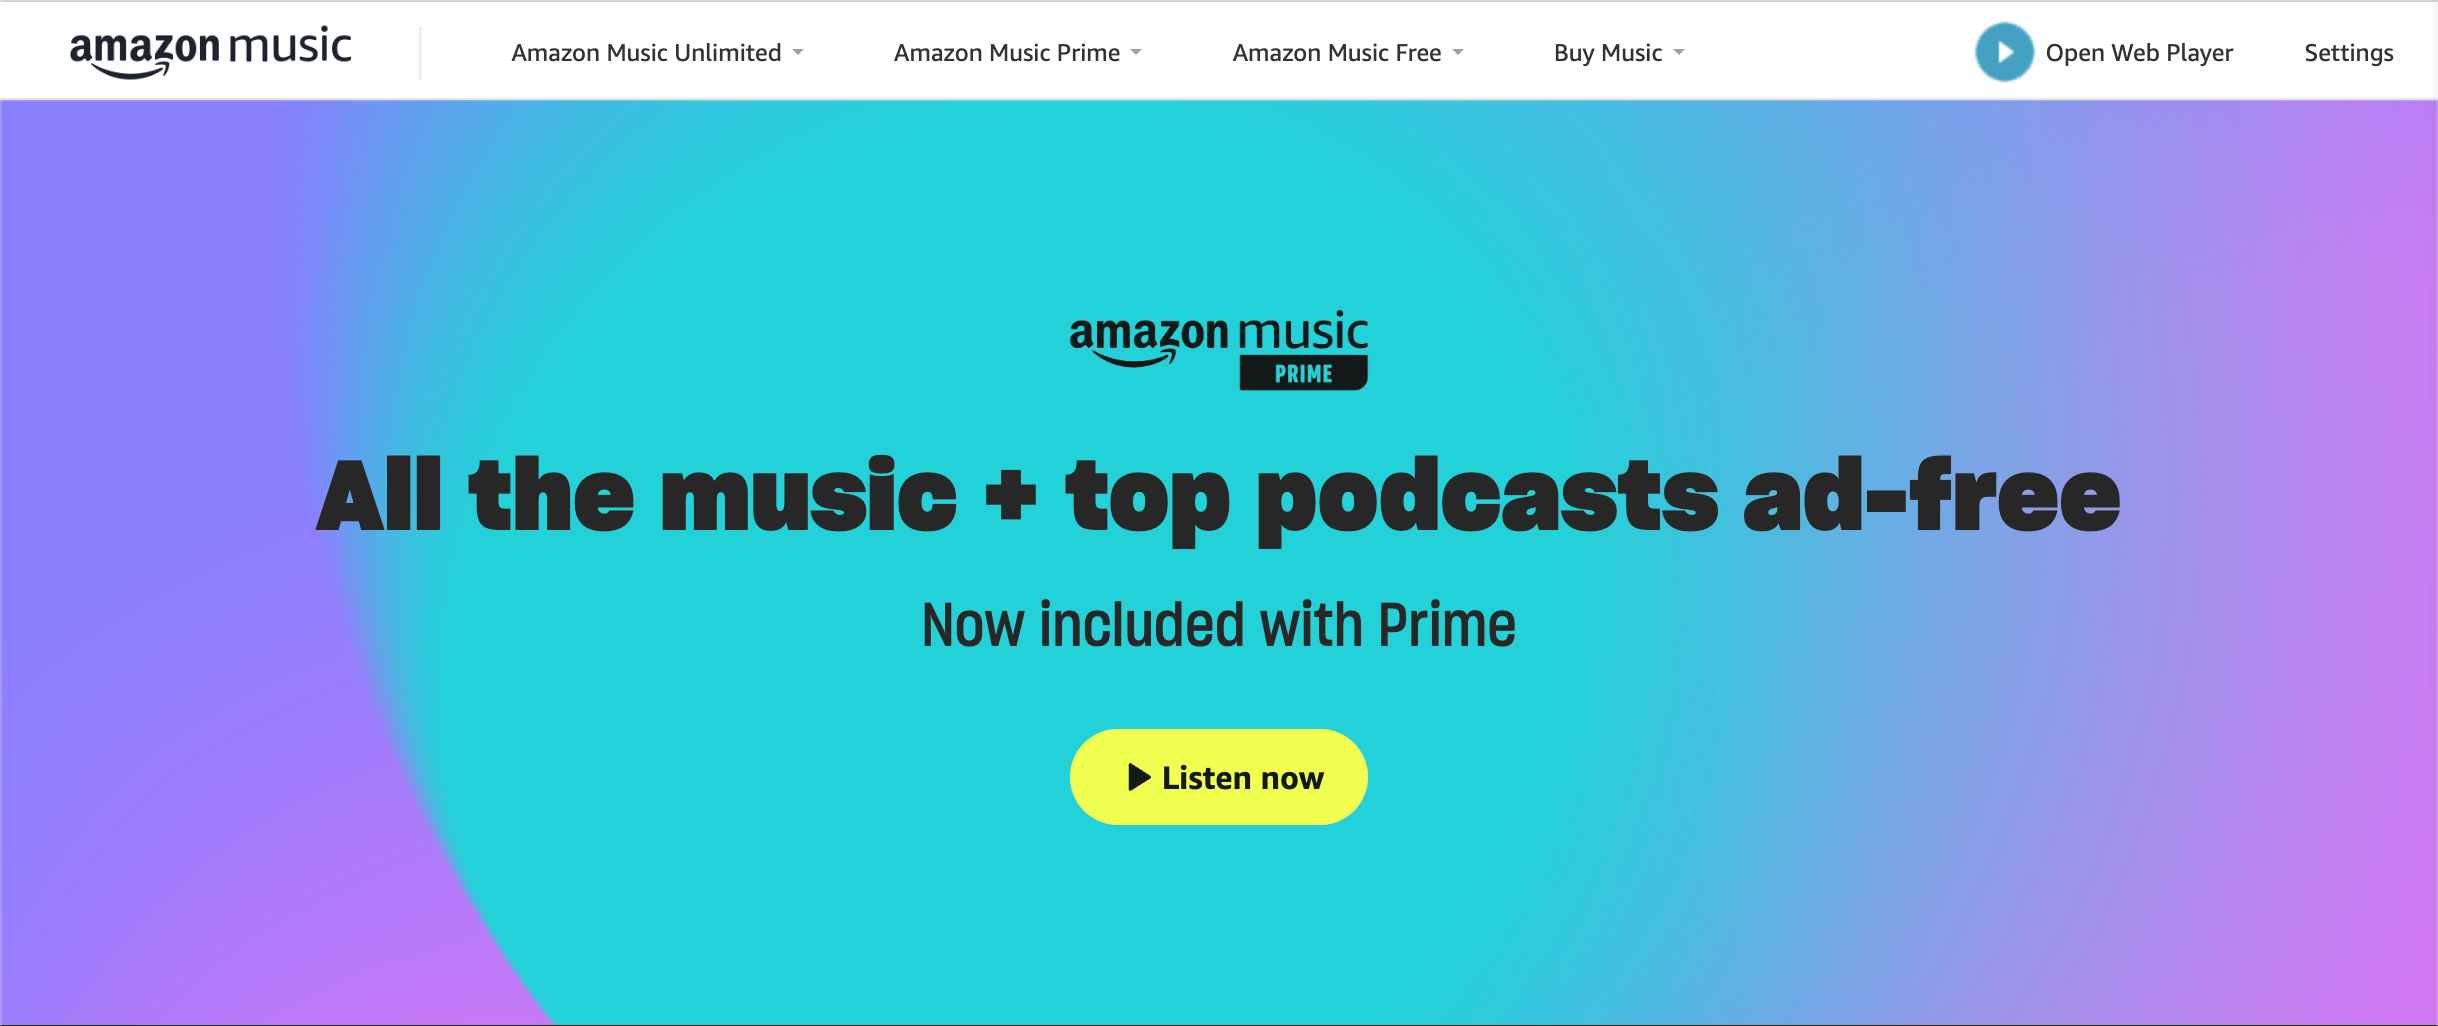 Prime Members' Music Catalog Now 100 Million Songs